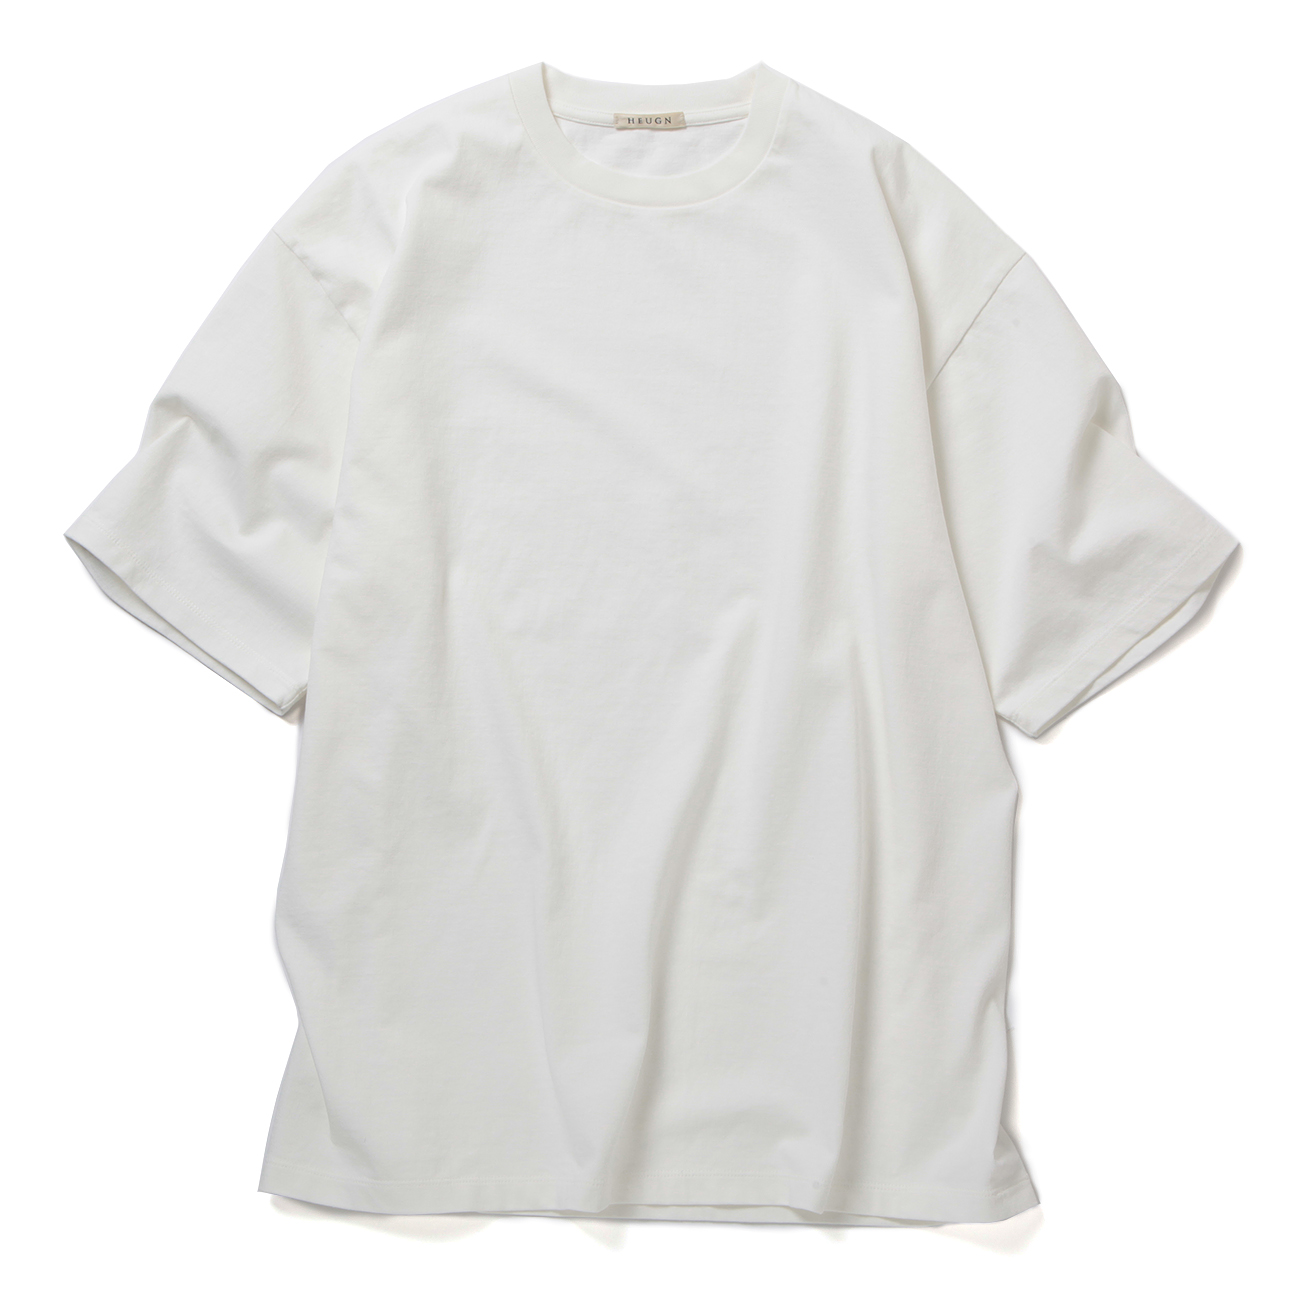 Josh T-shirts - White